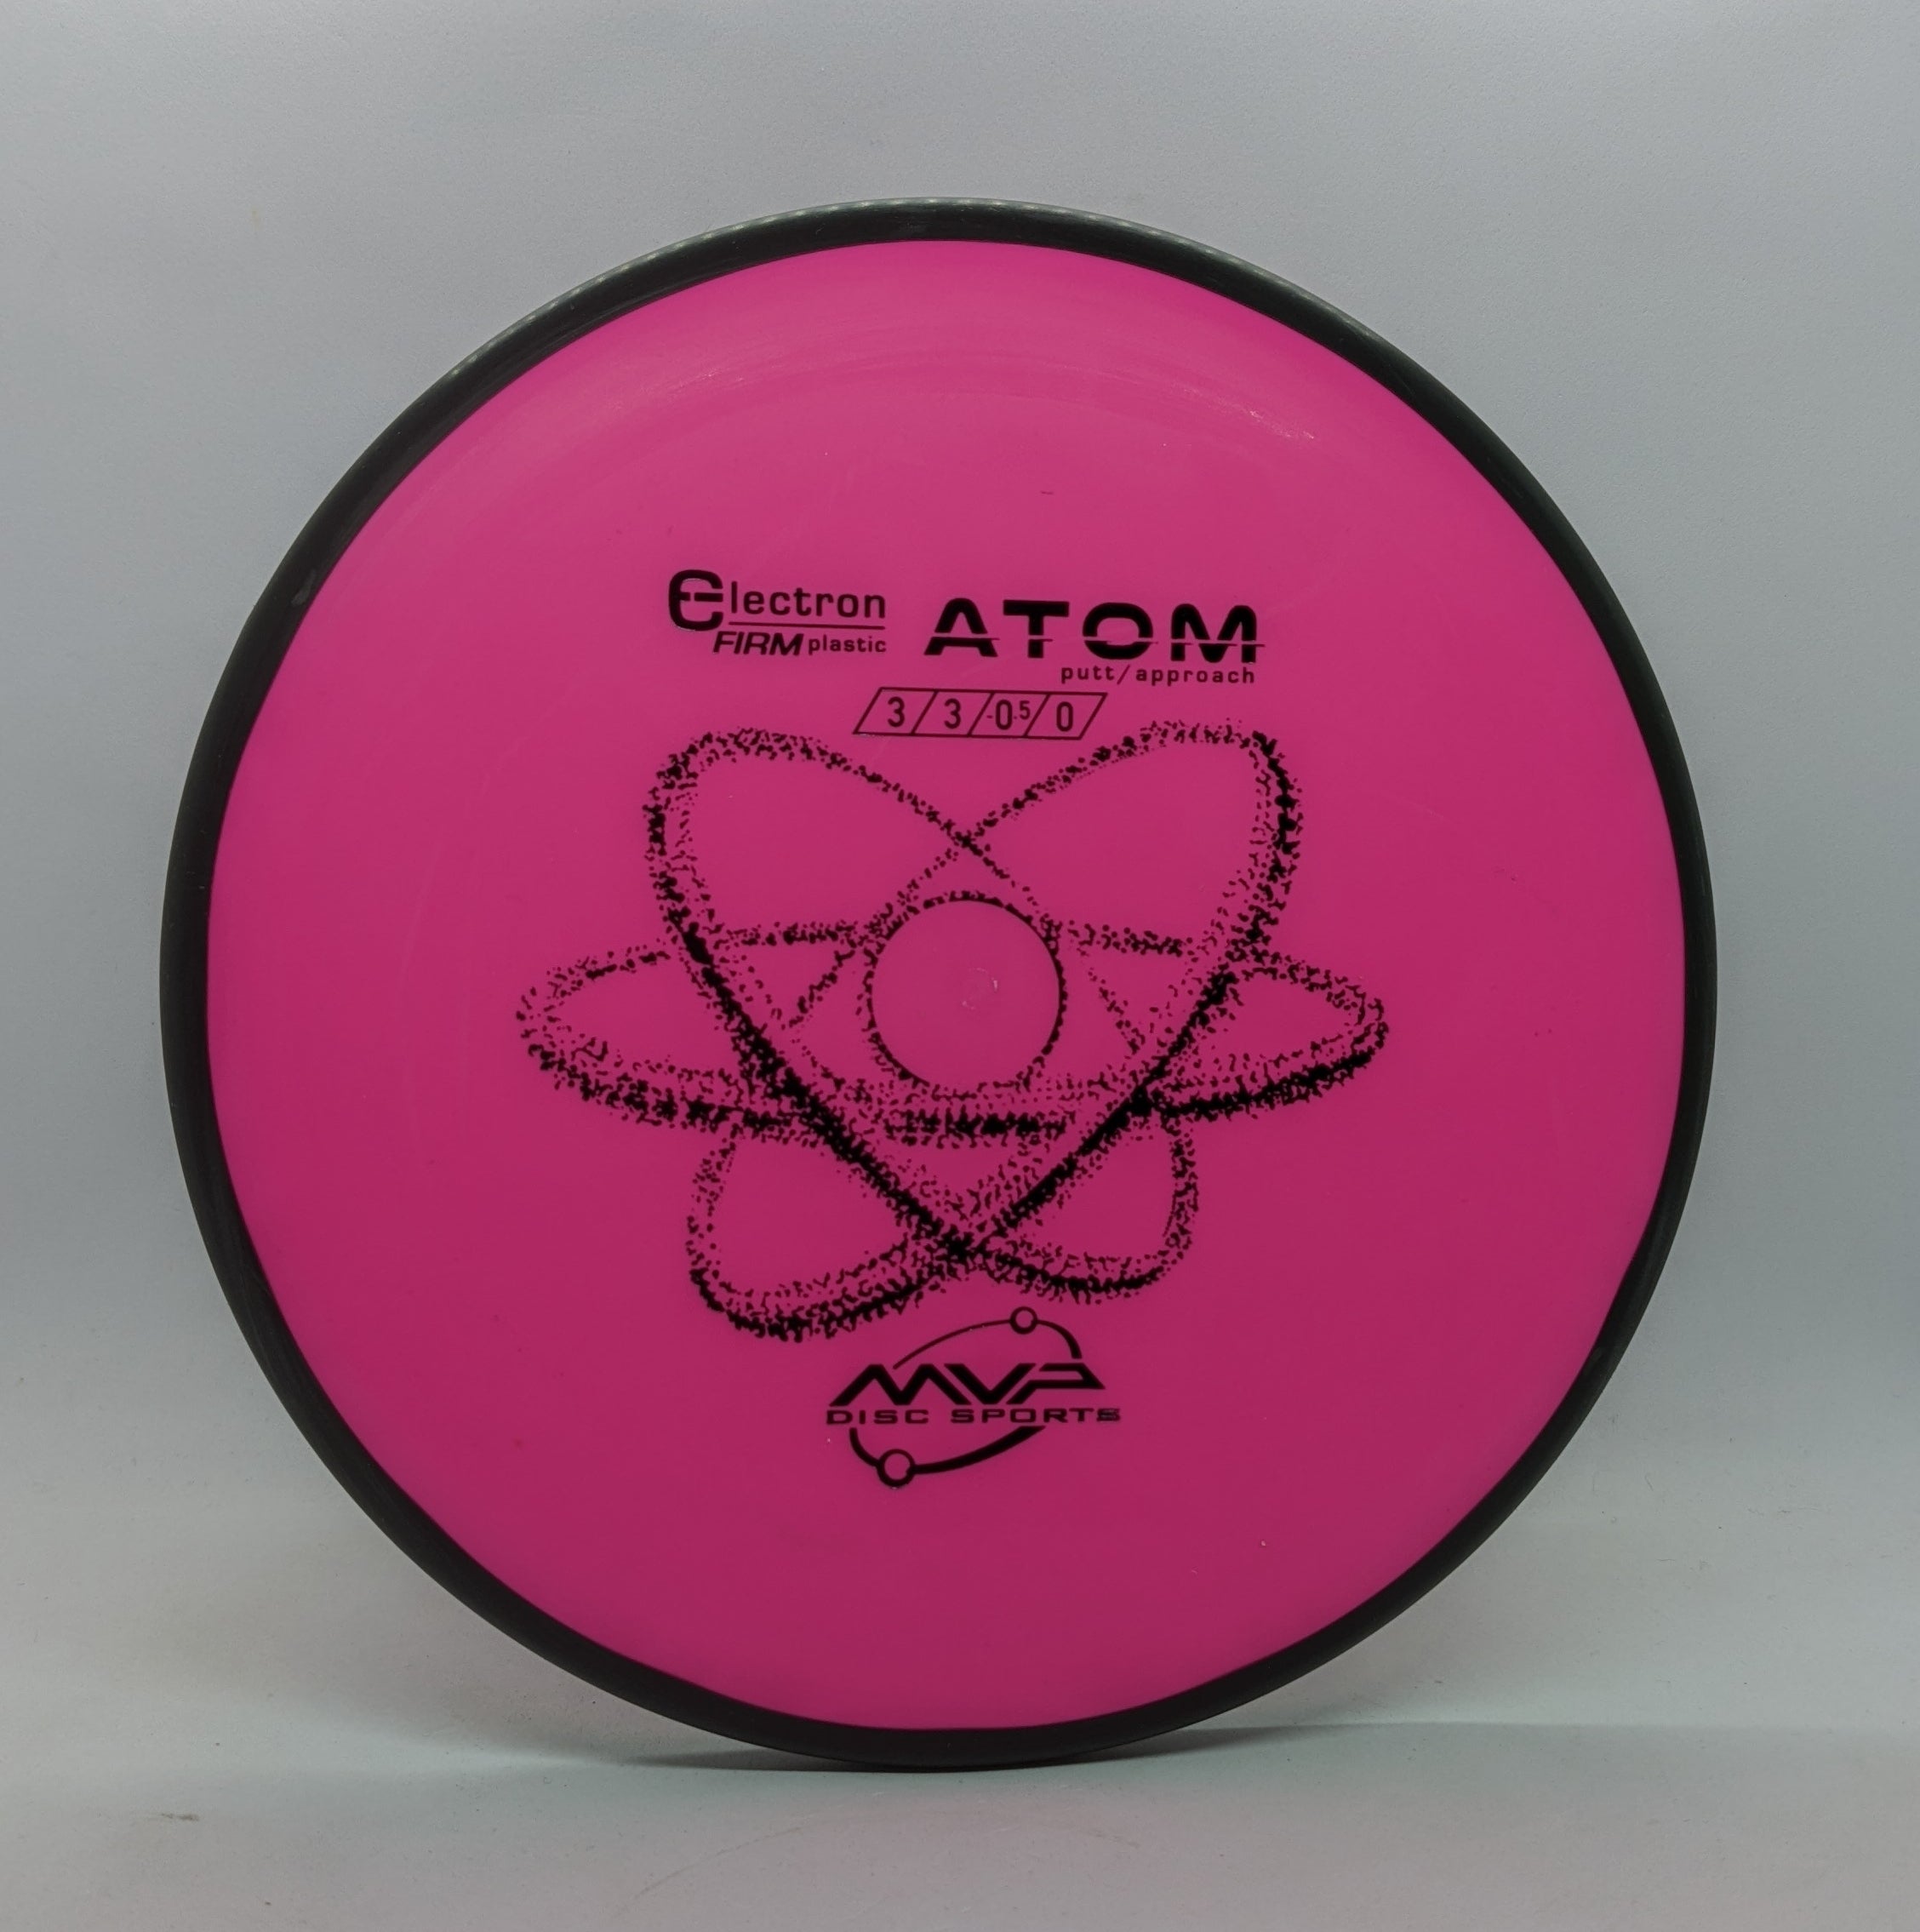 Electron Atom Firm-2